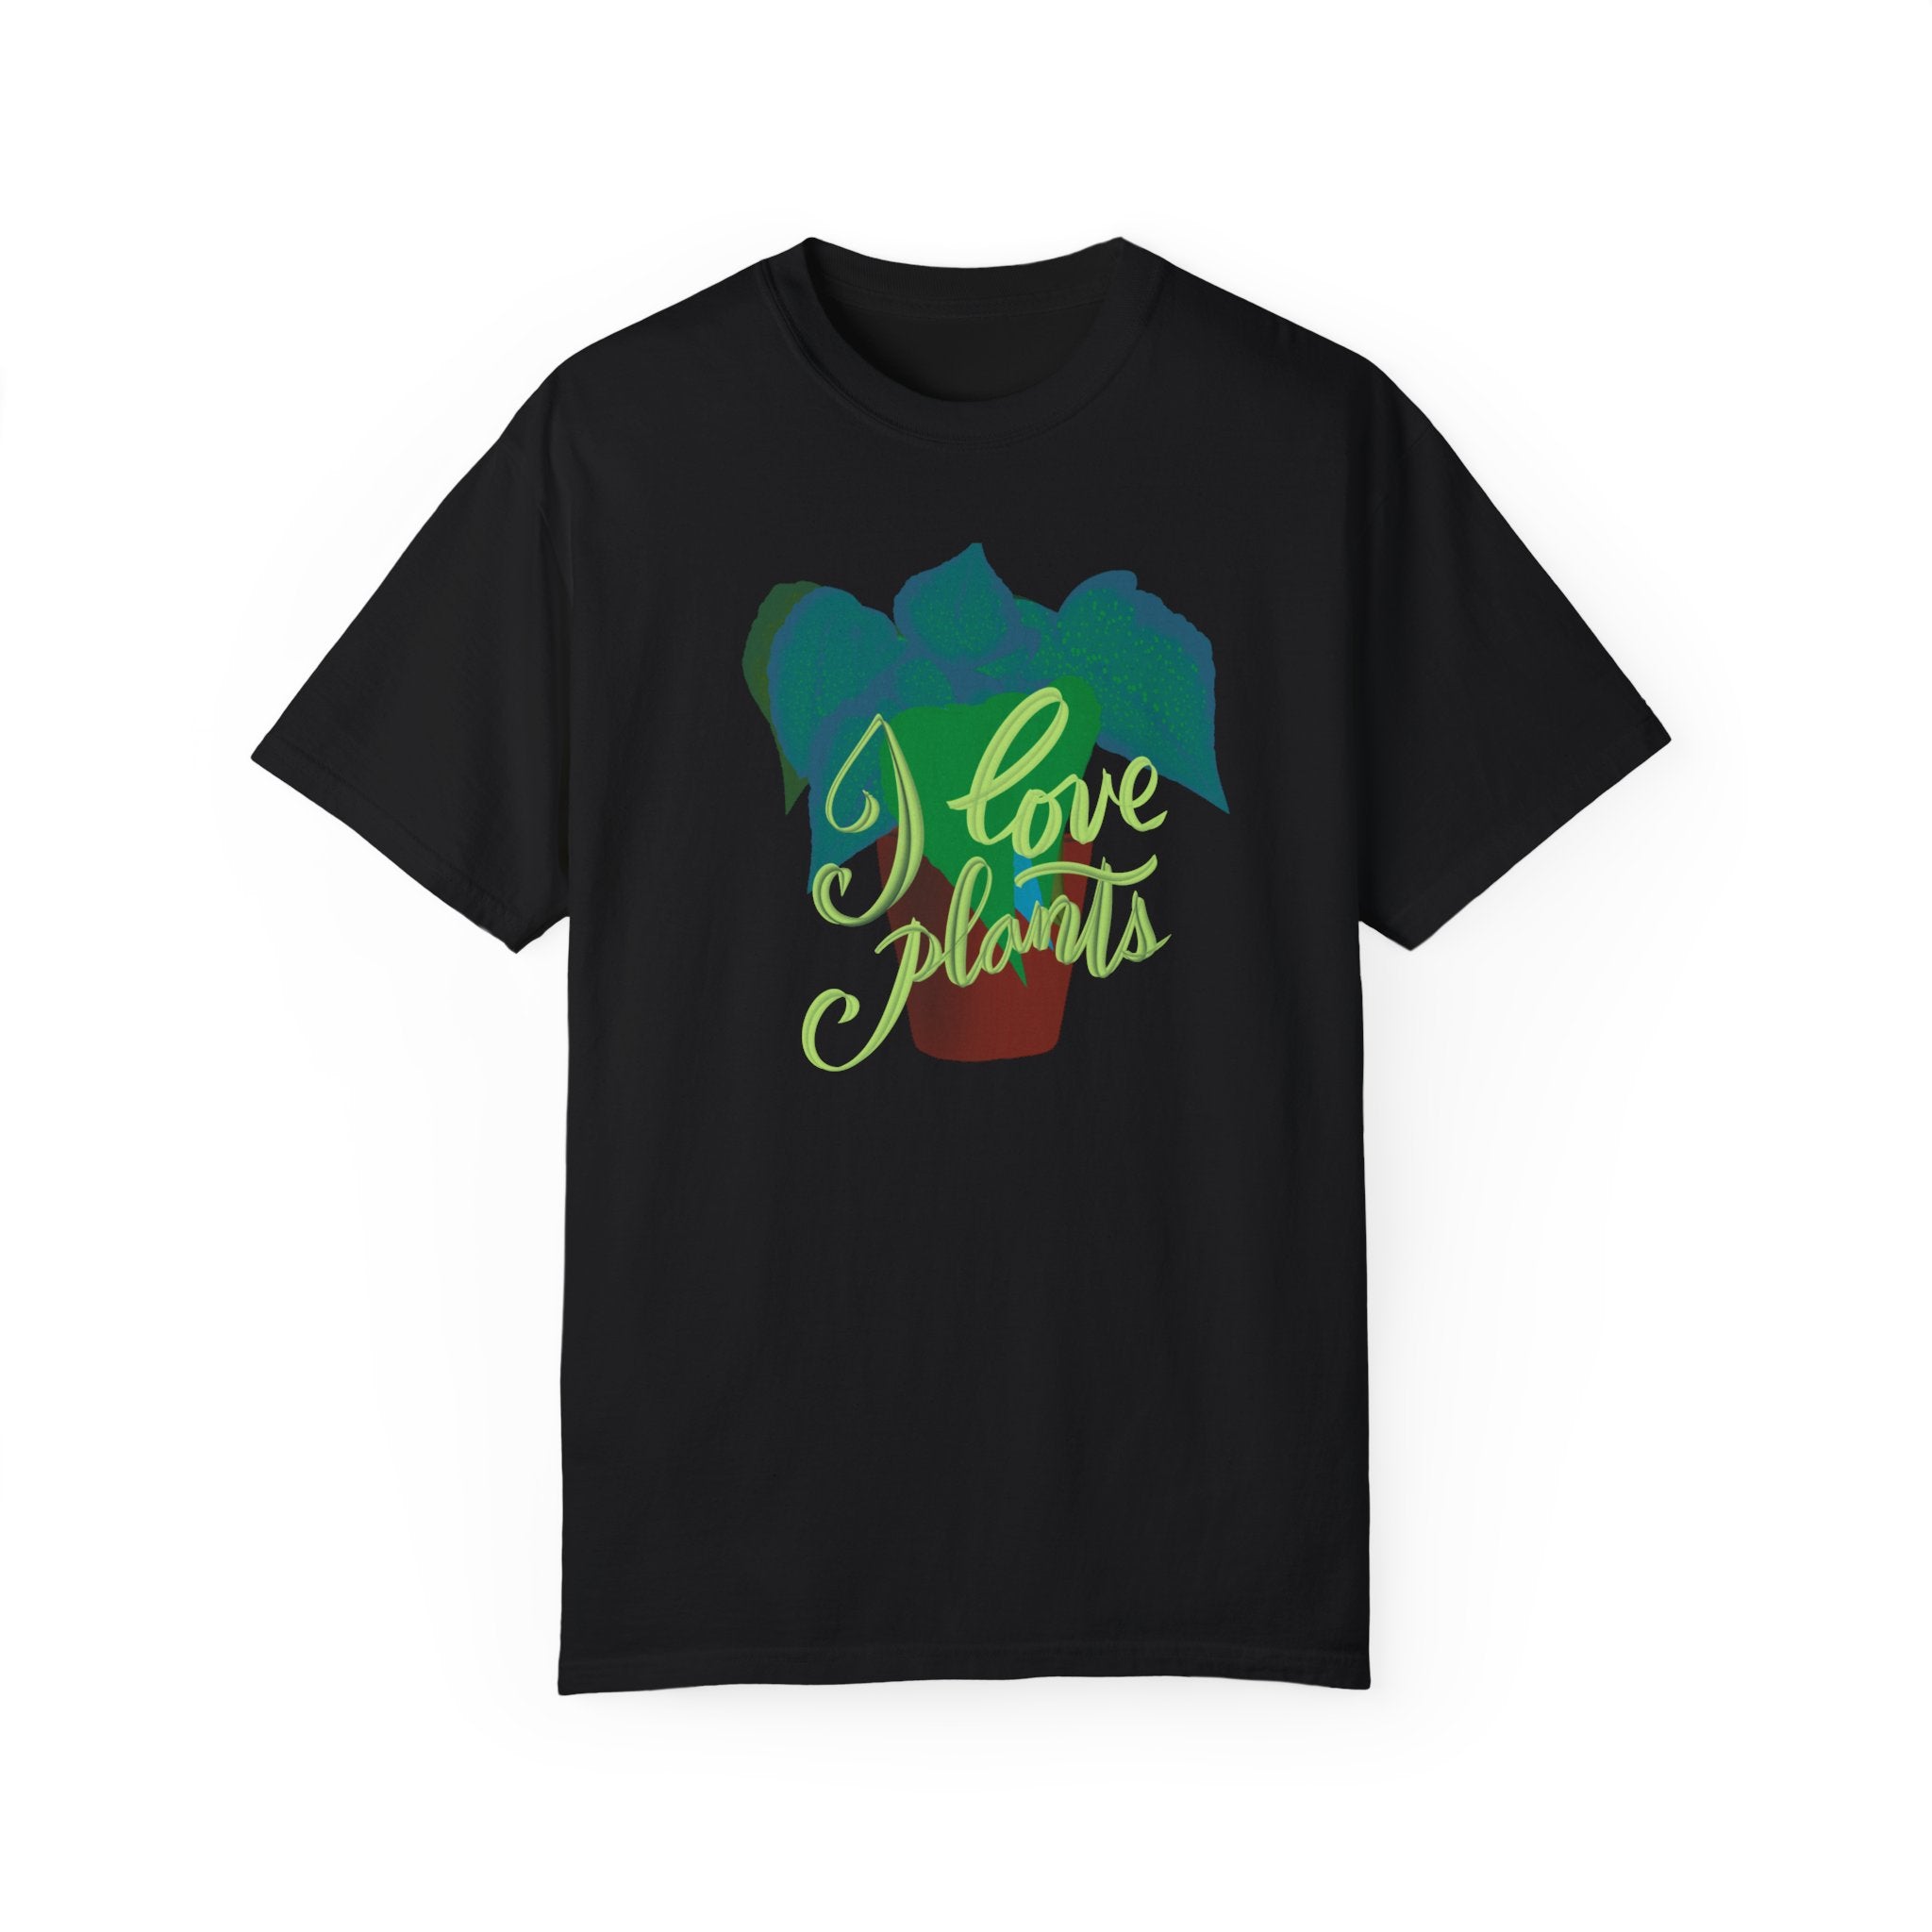 I LOVE PLANTS Unisex Garment-Dyed T-shirt